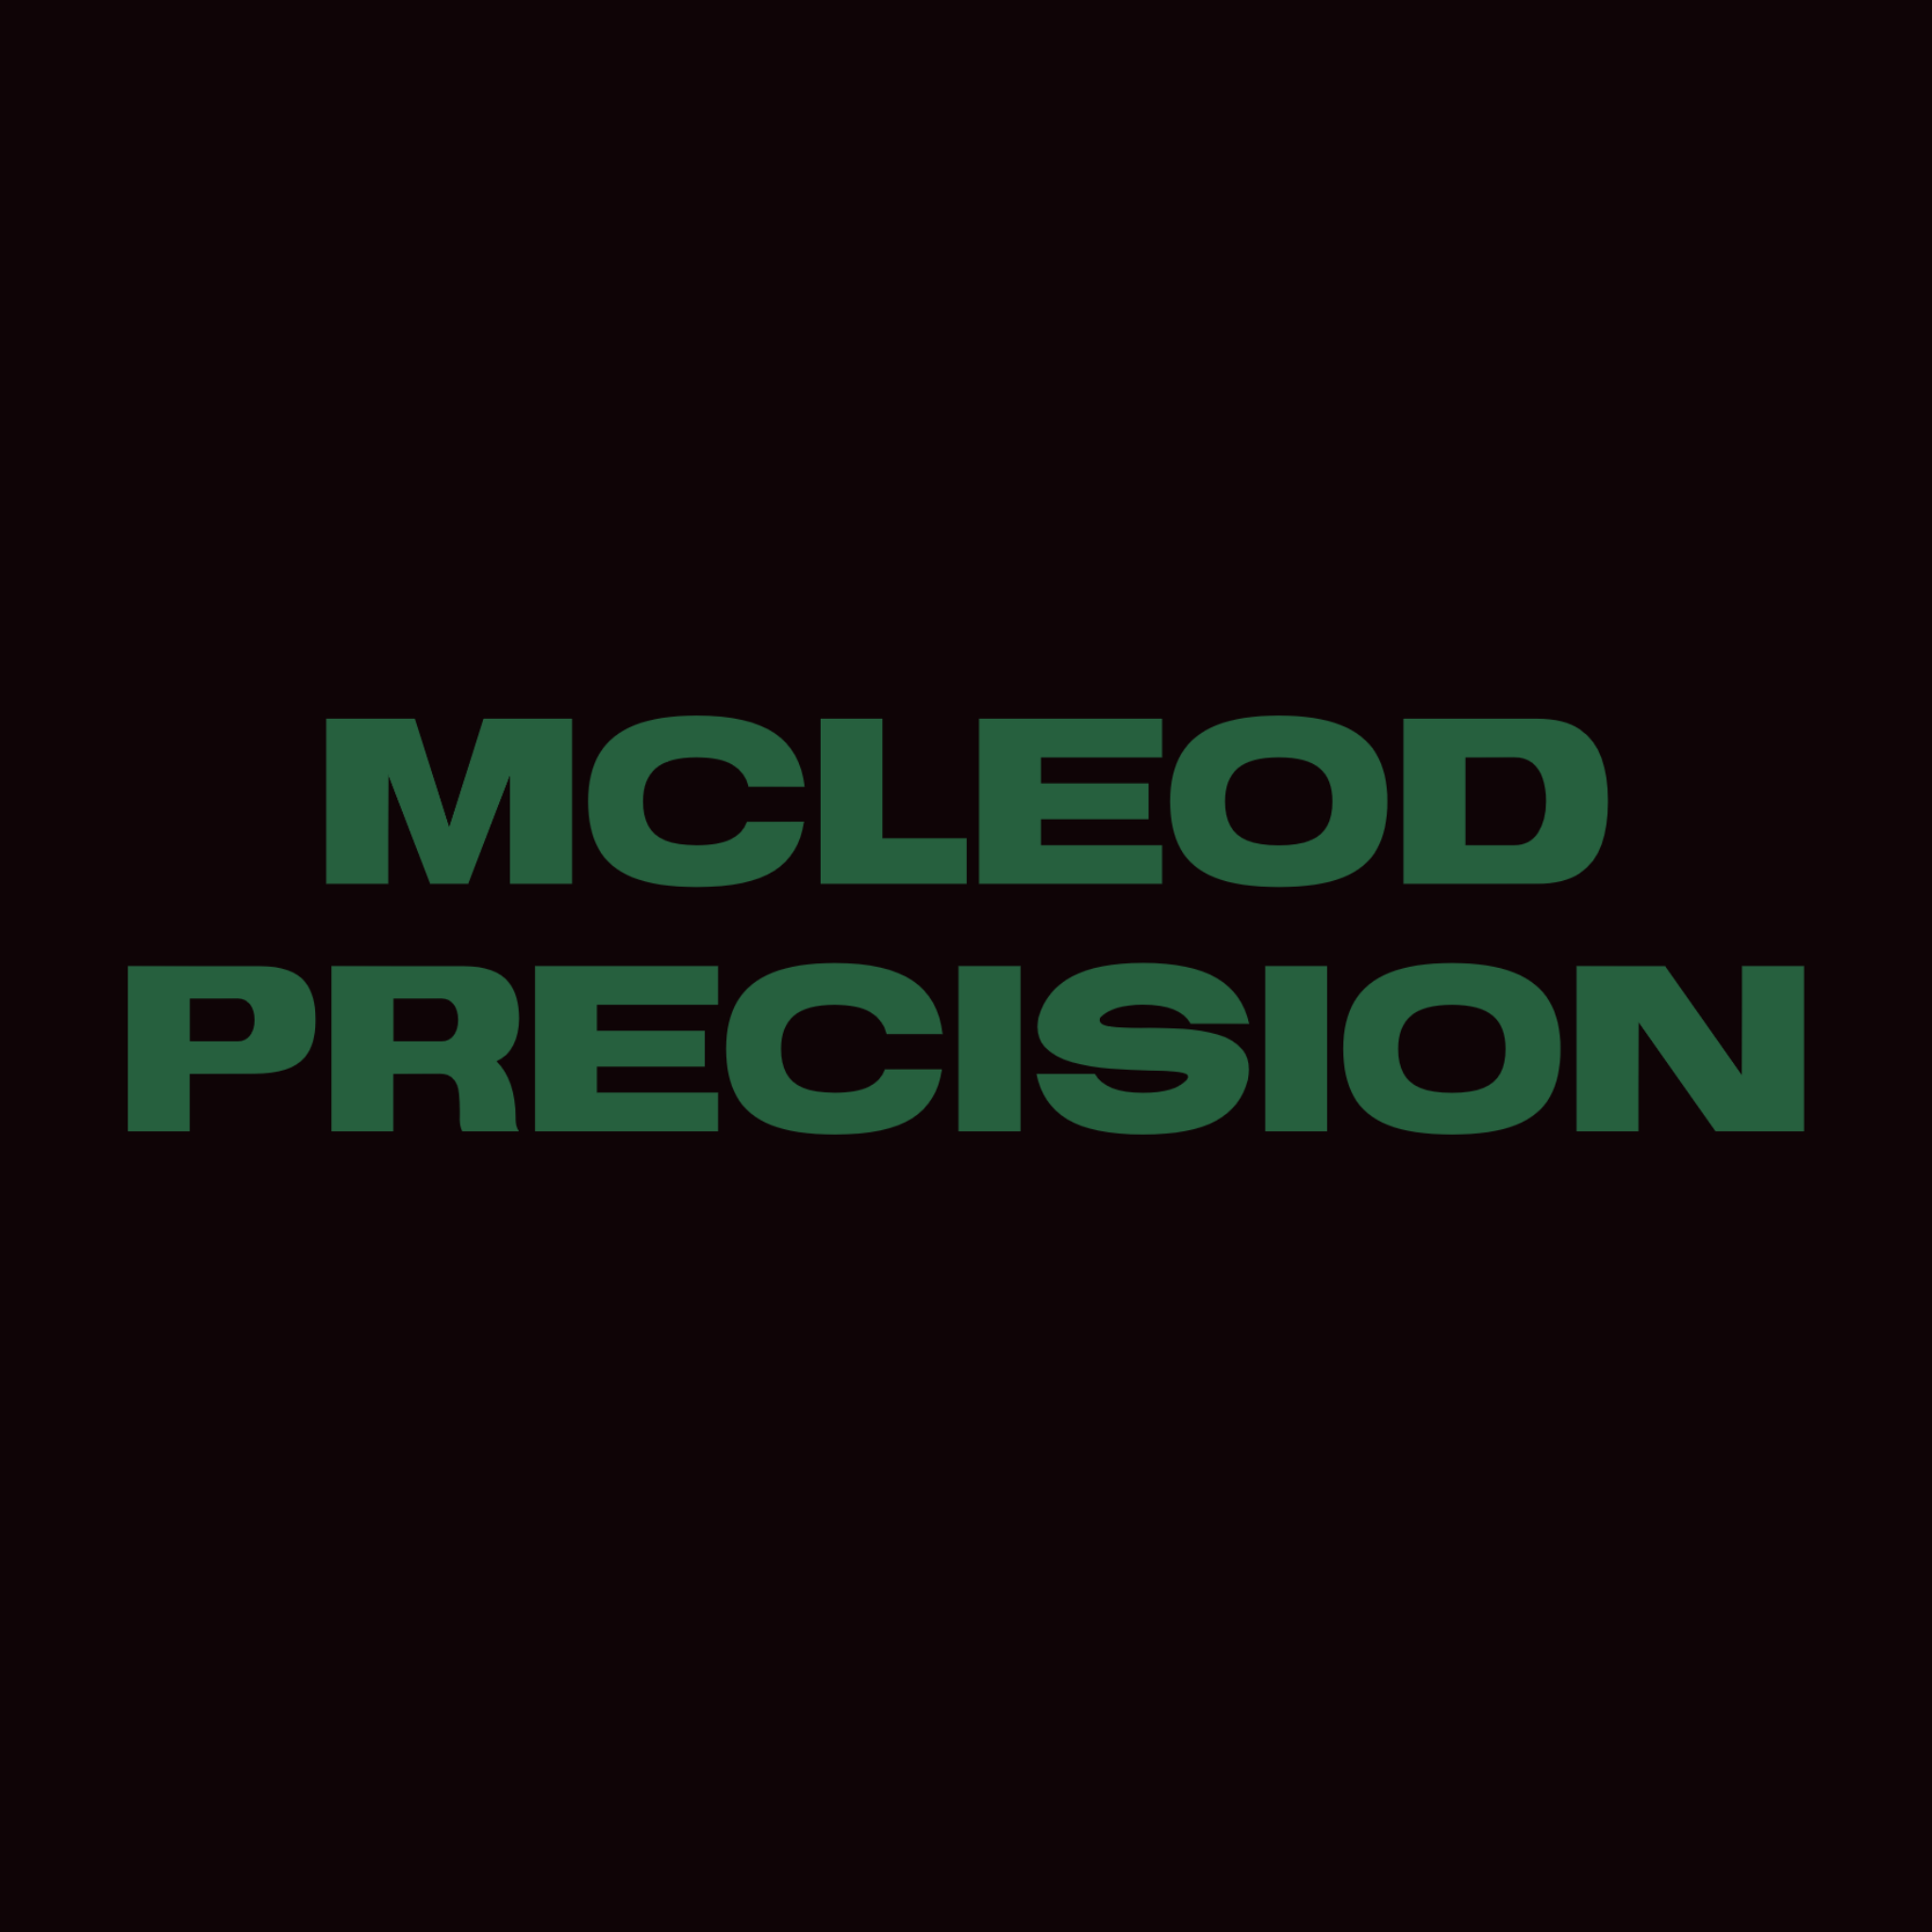 www.mcleodprecision.com